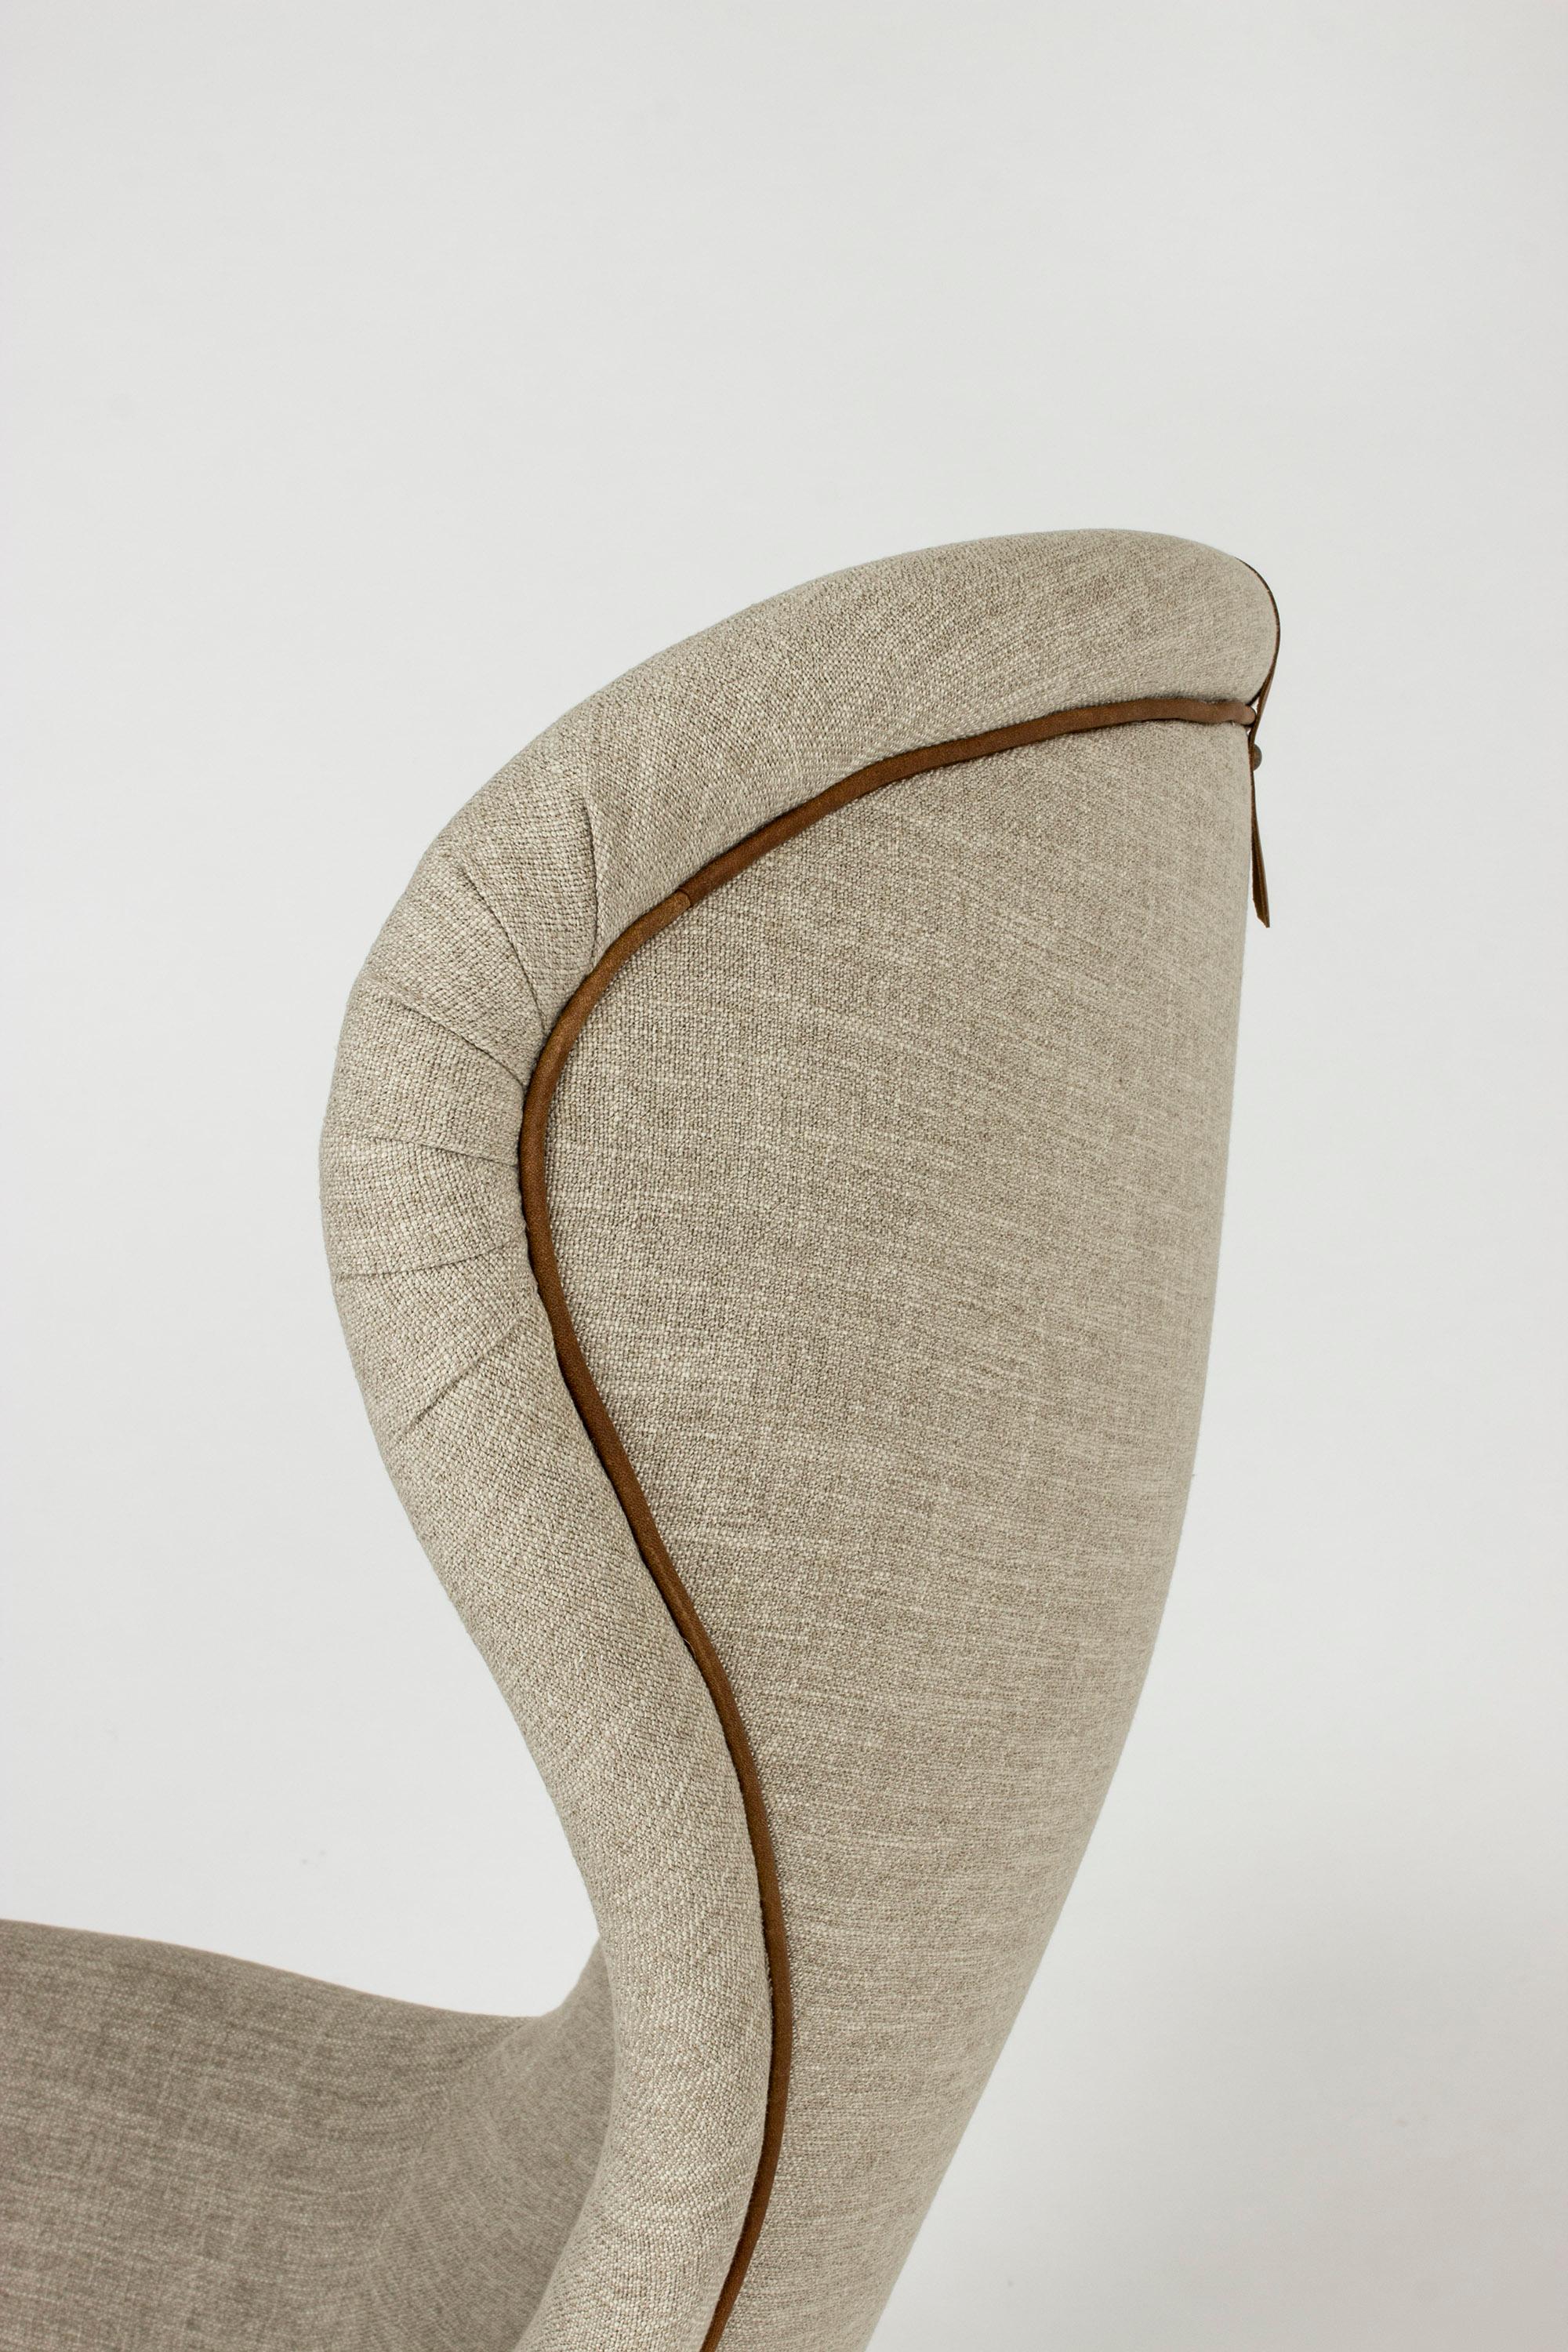 Lounge Chair by Gustaf Hiort af Ornäs 1